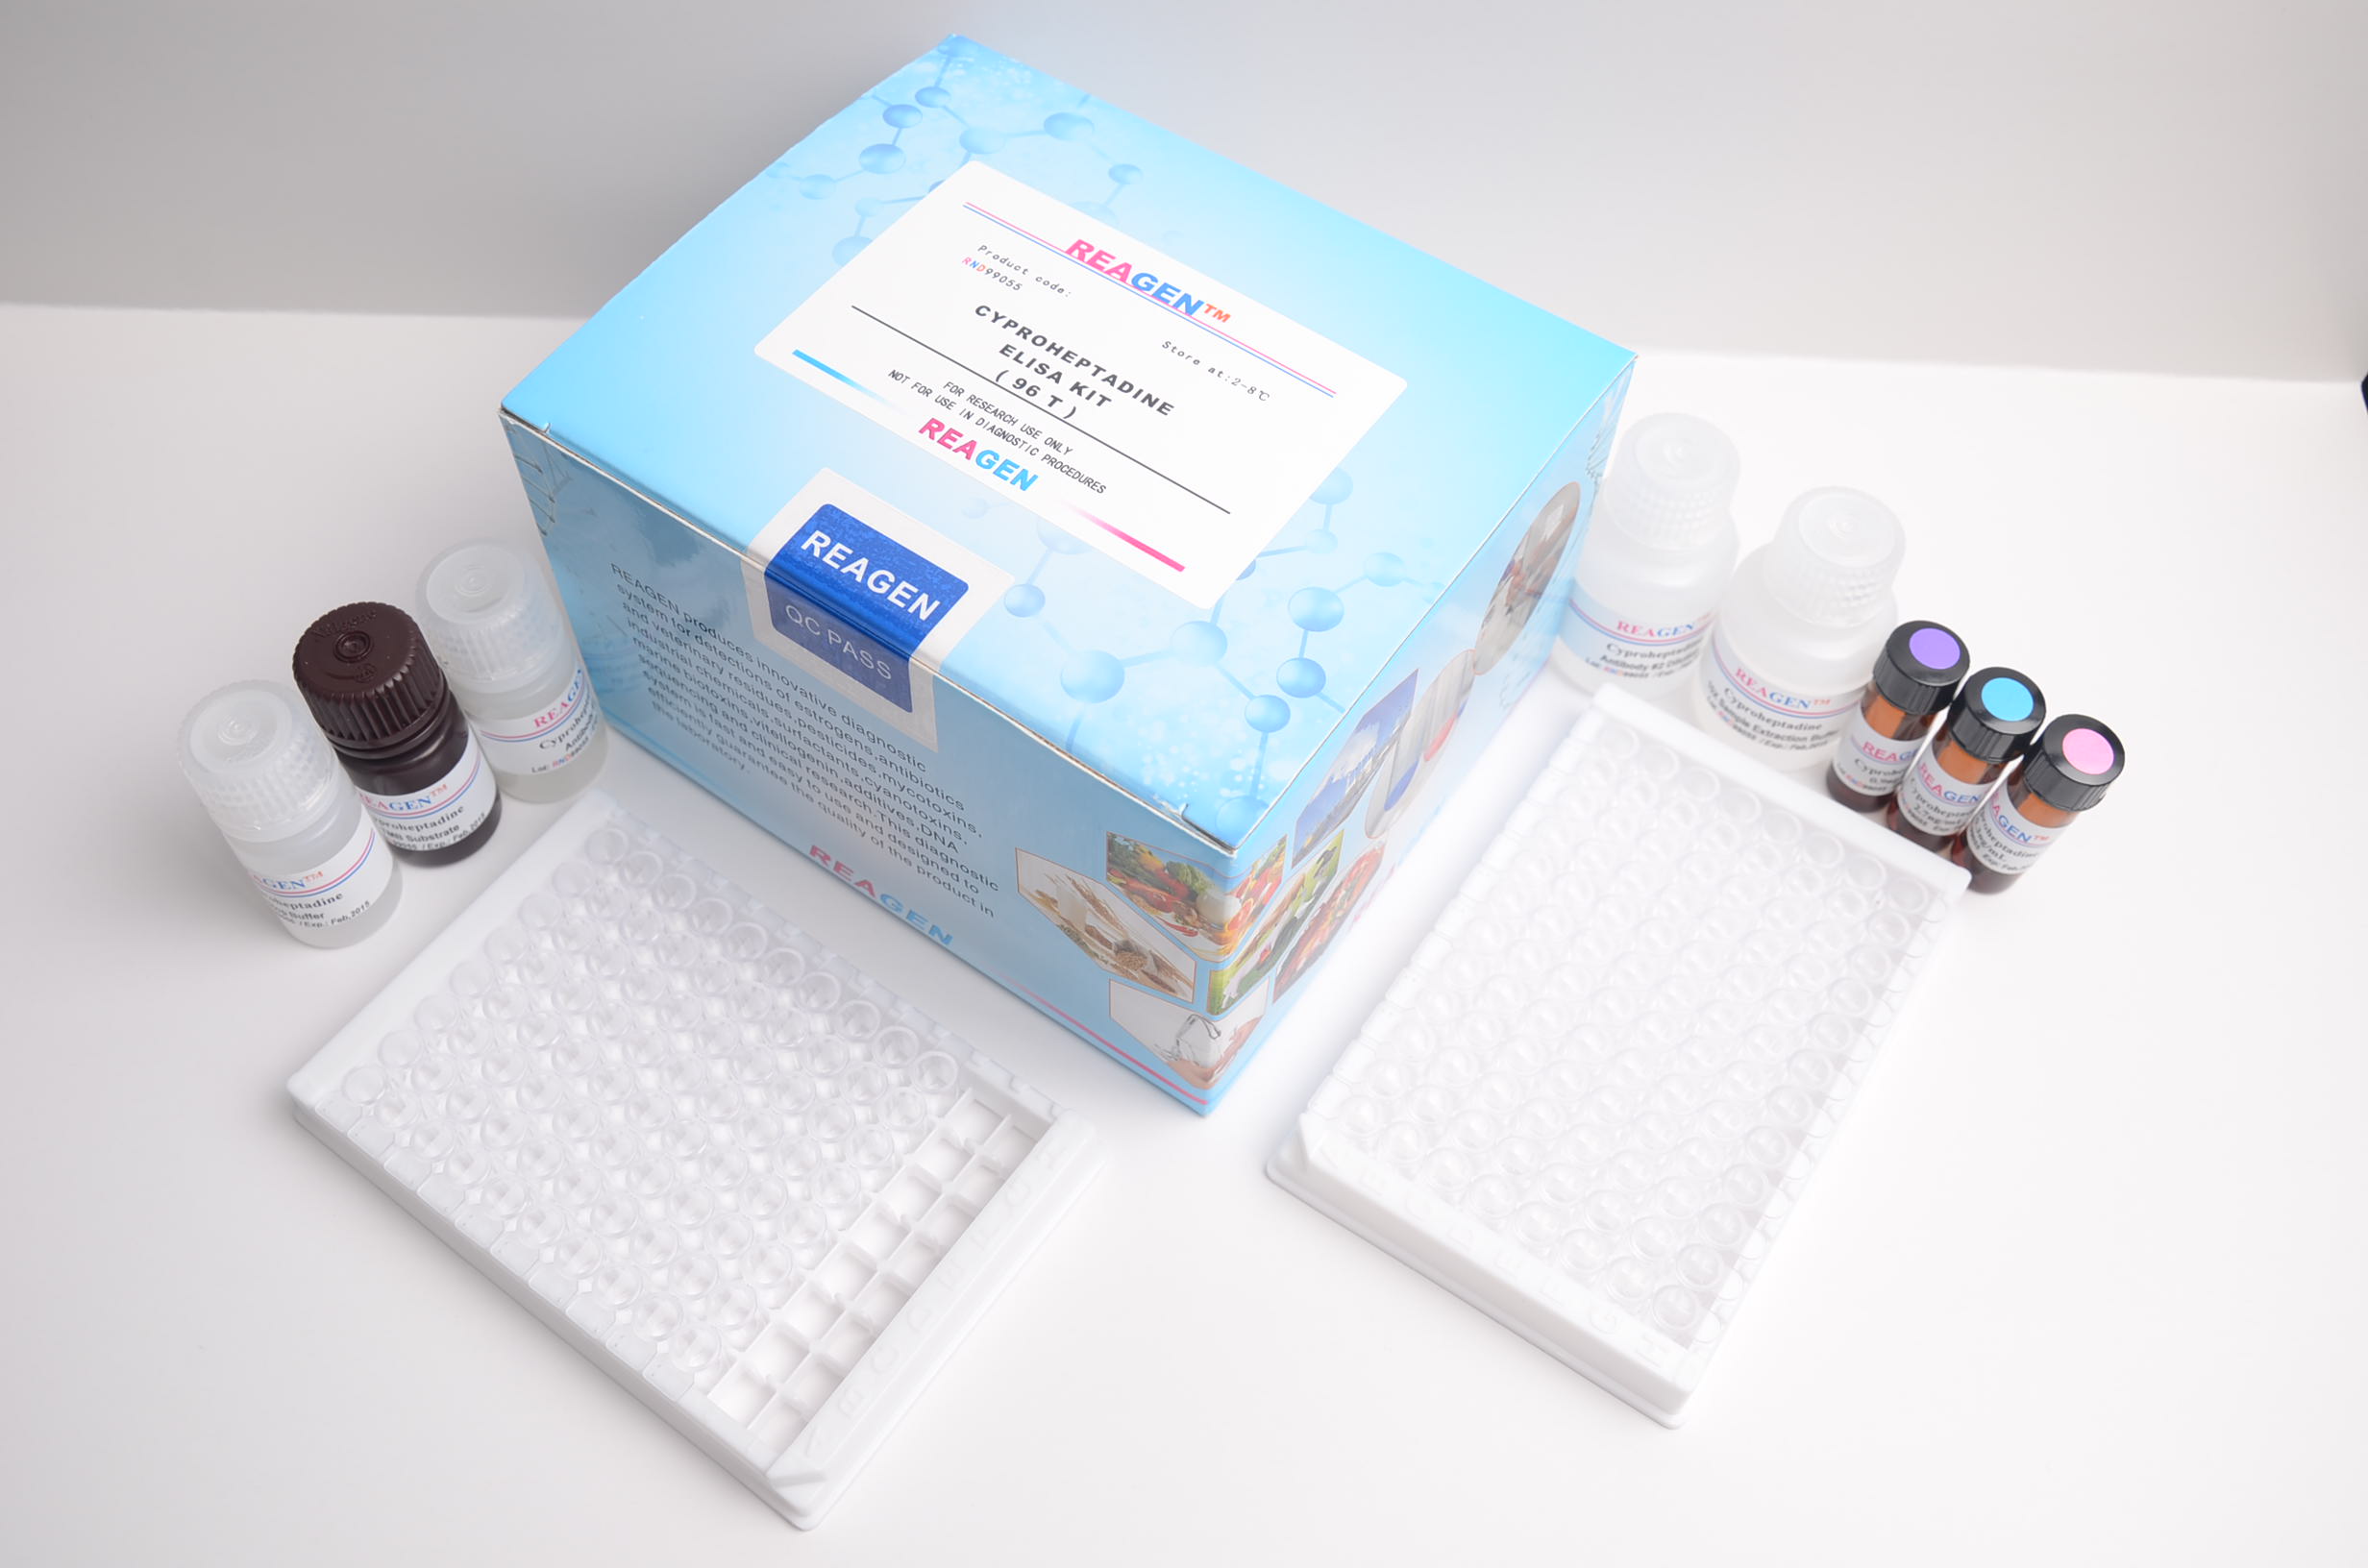 微囊藻素ADDA检测试剂盒